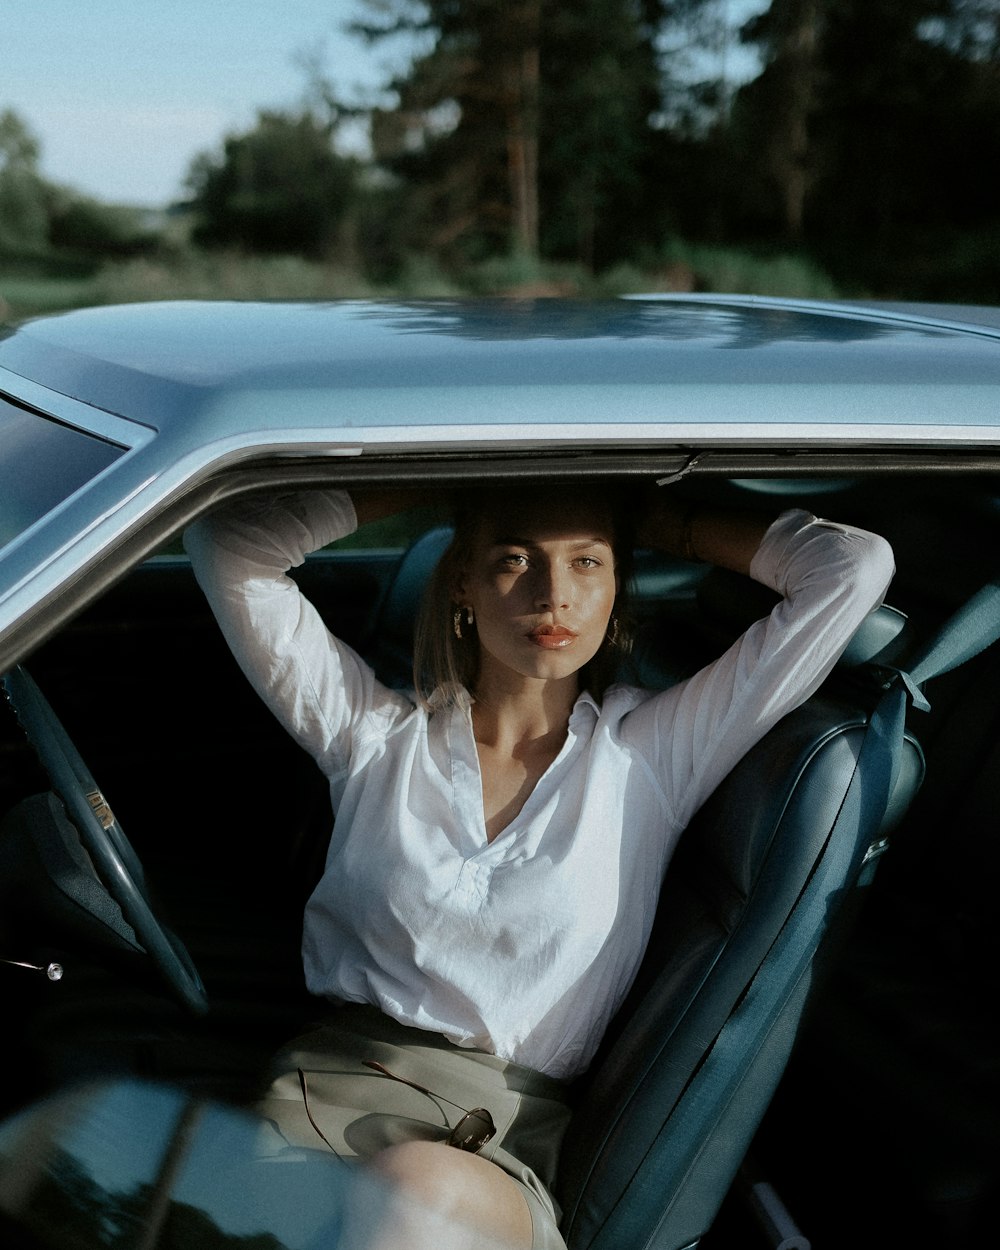 woman in white dress shirt sitting on car seat